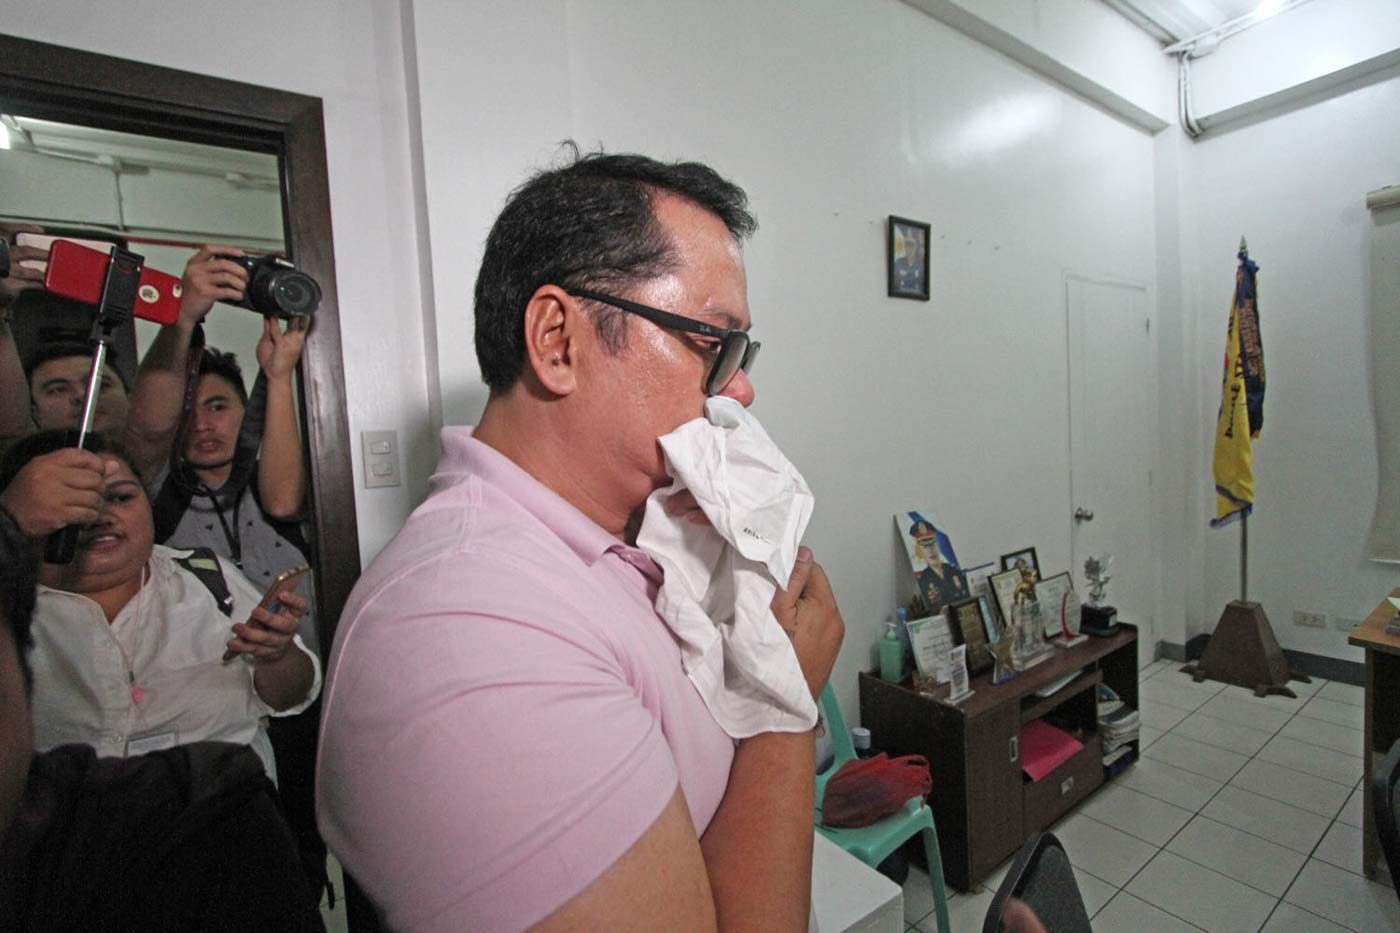 Misamis Occidental town mayor arrested for alleged assault in Cebu